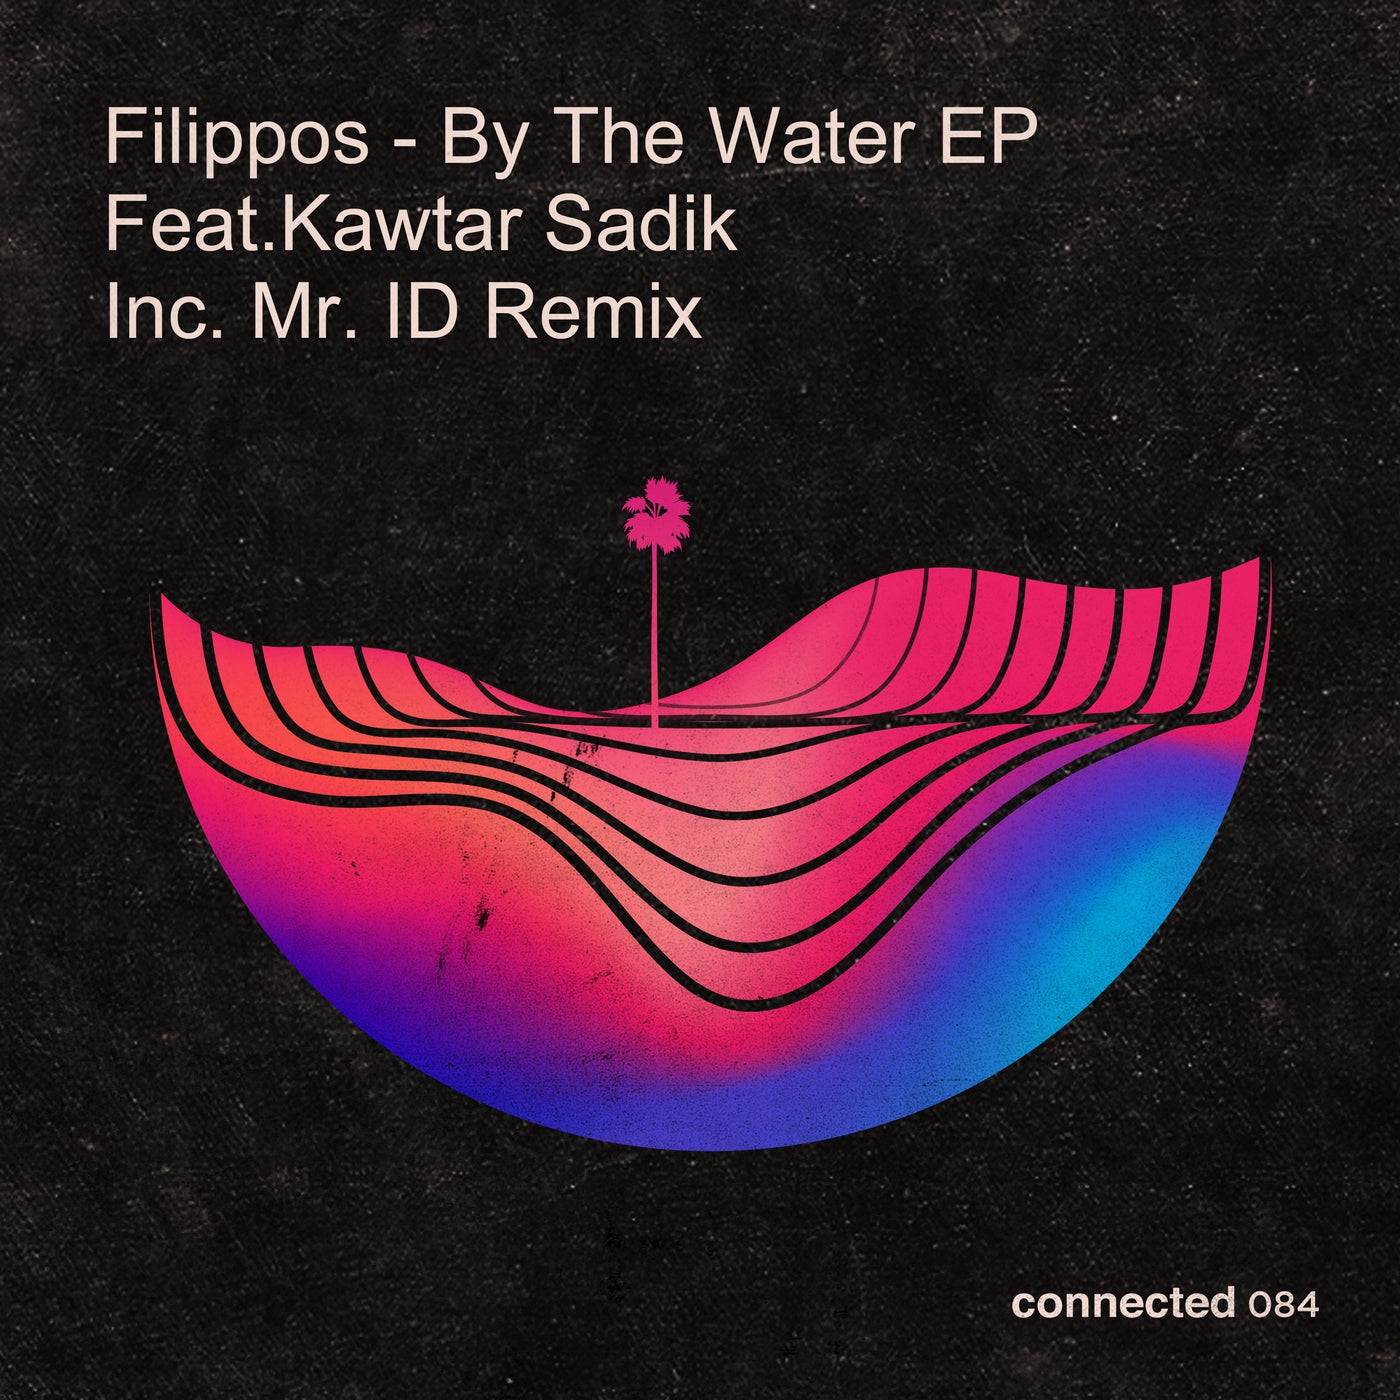 image cover: Kawtar Sadik, Filippos - By The Water EP feat. Kawtar Sadik / CONNECTED084